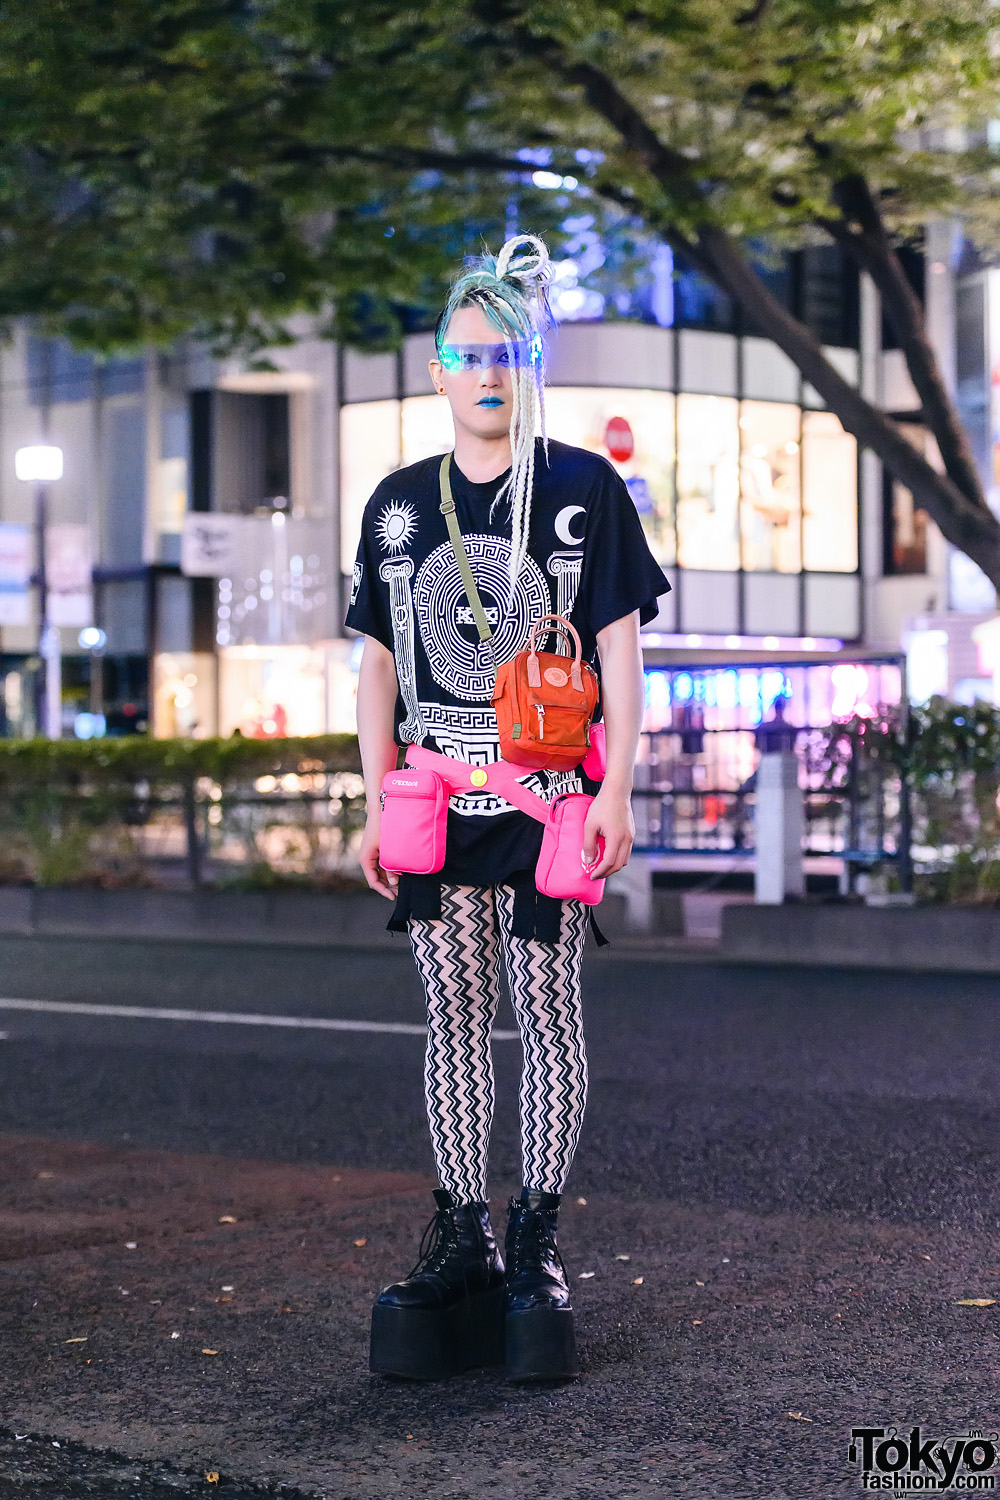 Harajuku Streetwear Style w/ Braided Hairstyle, LED Visor Glasses, Blue Lipstick, KTZ Shirt, Chevron Print Tights, Acne Studios, Cyberdog & Platform Boots